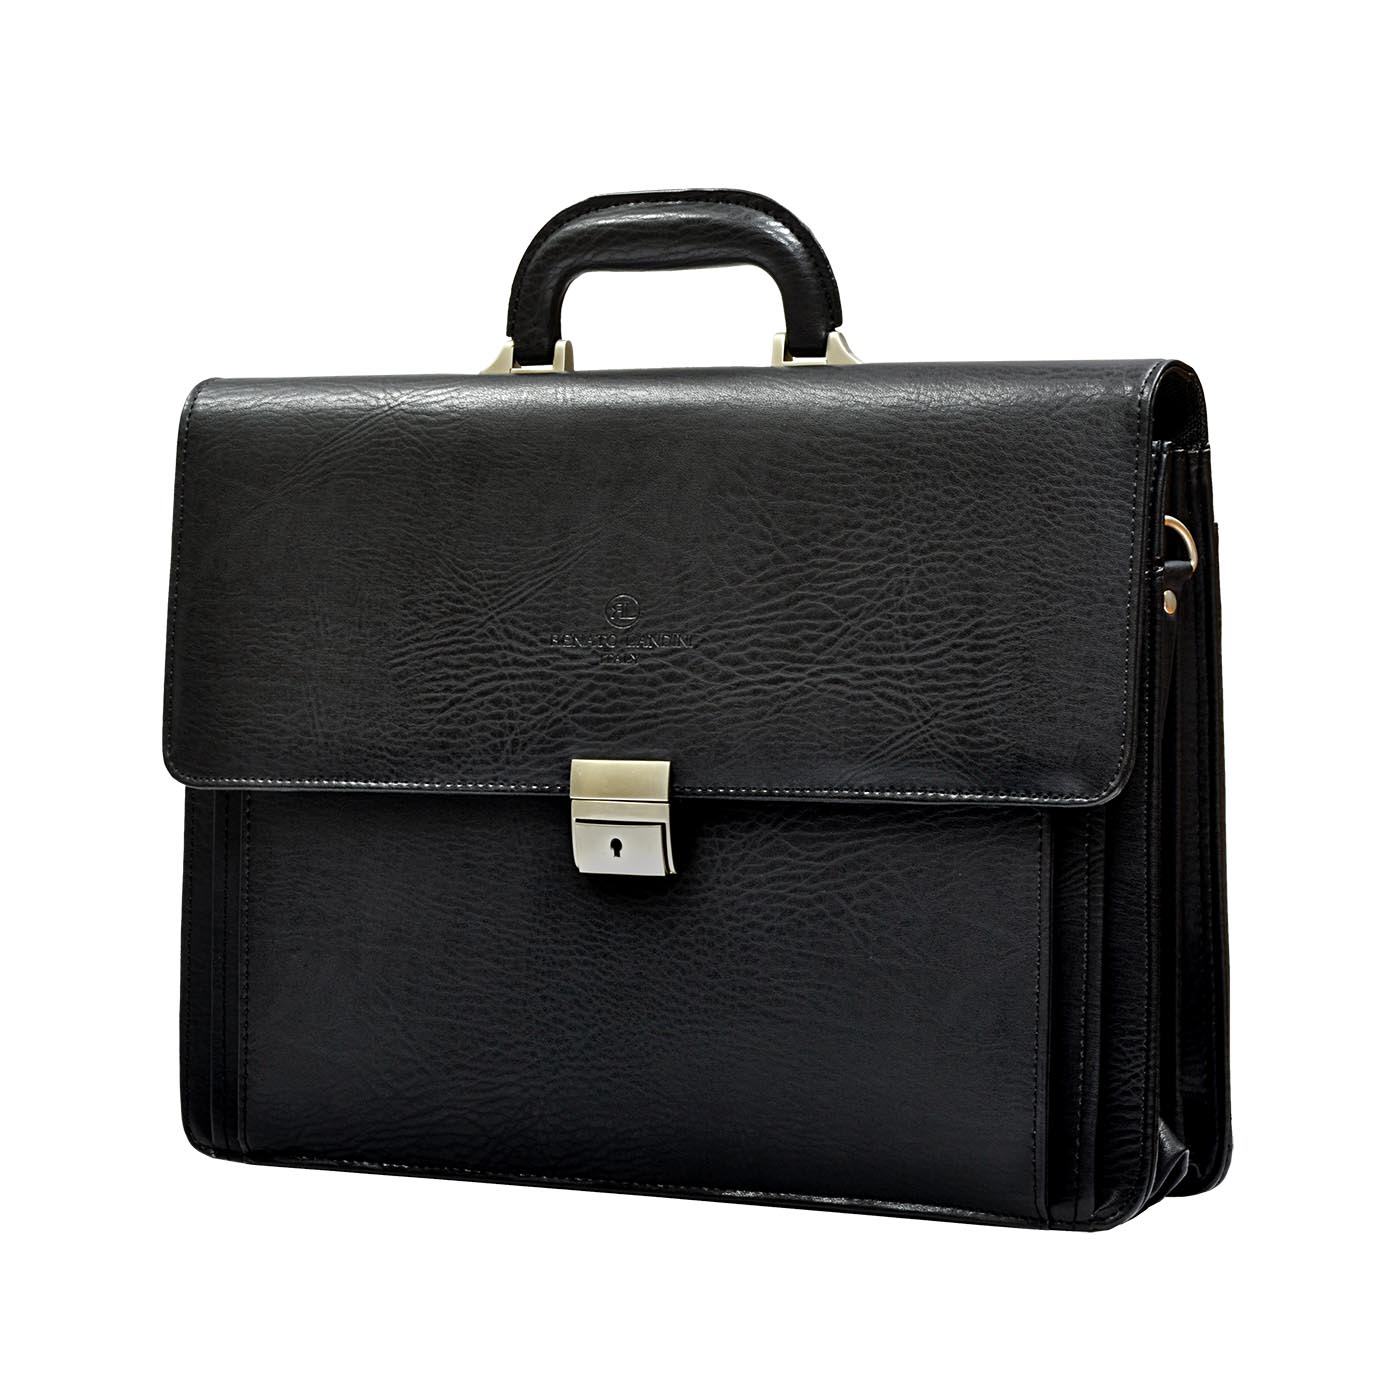 RENATO LANDINI Gift Set: Black Leather Bag + A5 Leather Folder